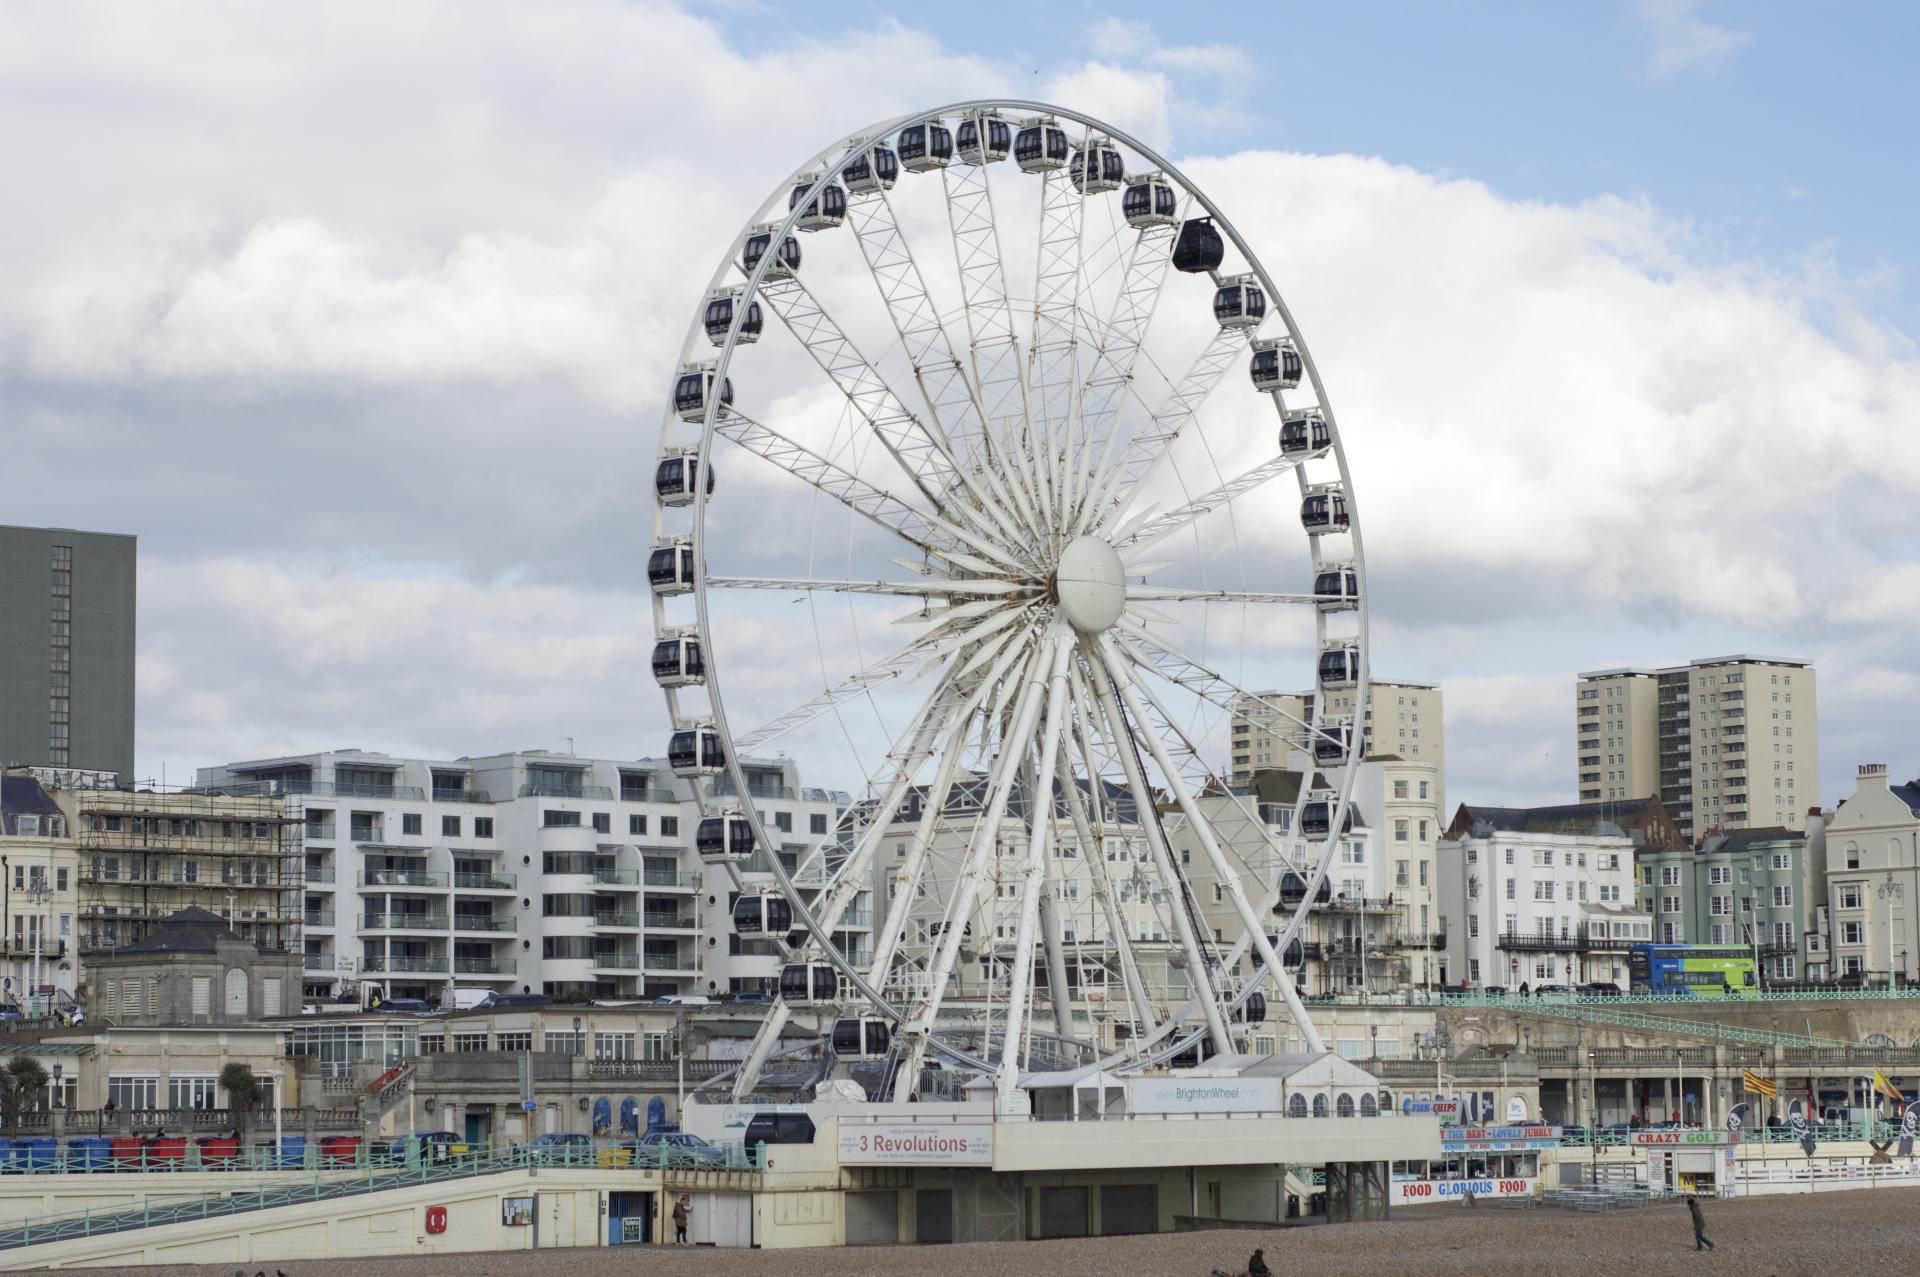 Made From Beauty Photo Diary: Anniversary Trip to Brighton Wheel